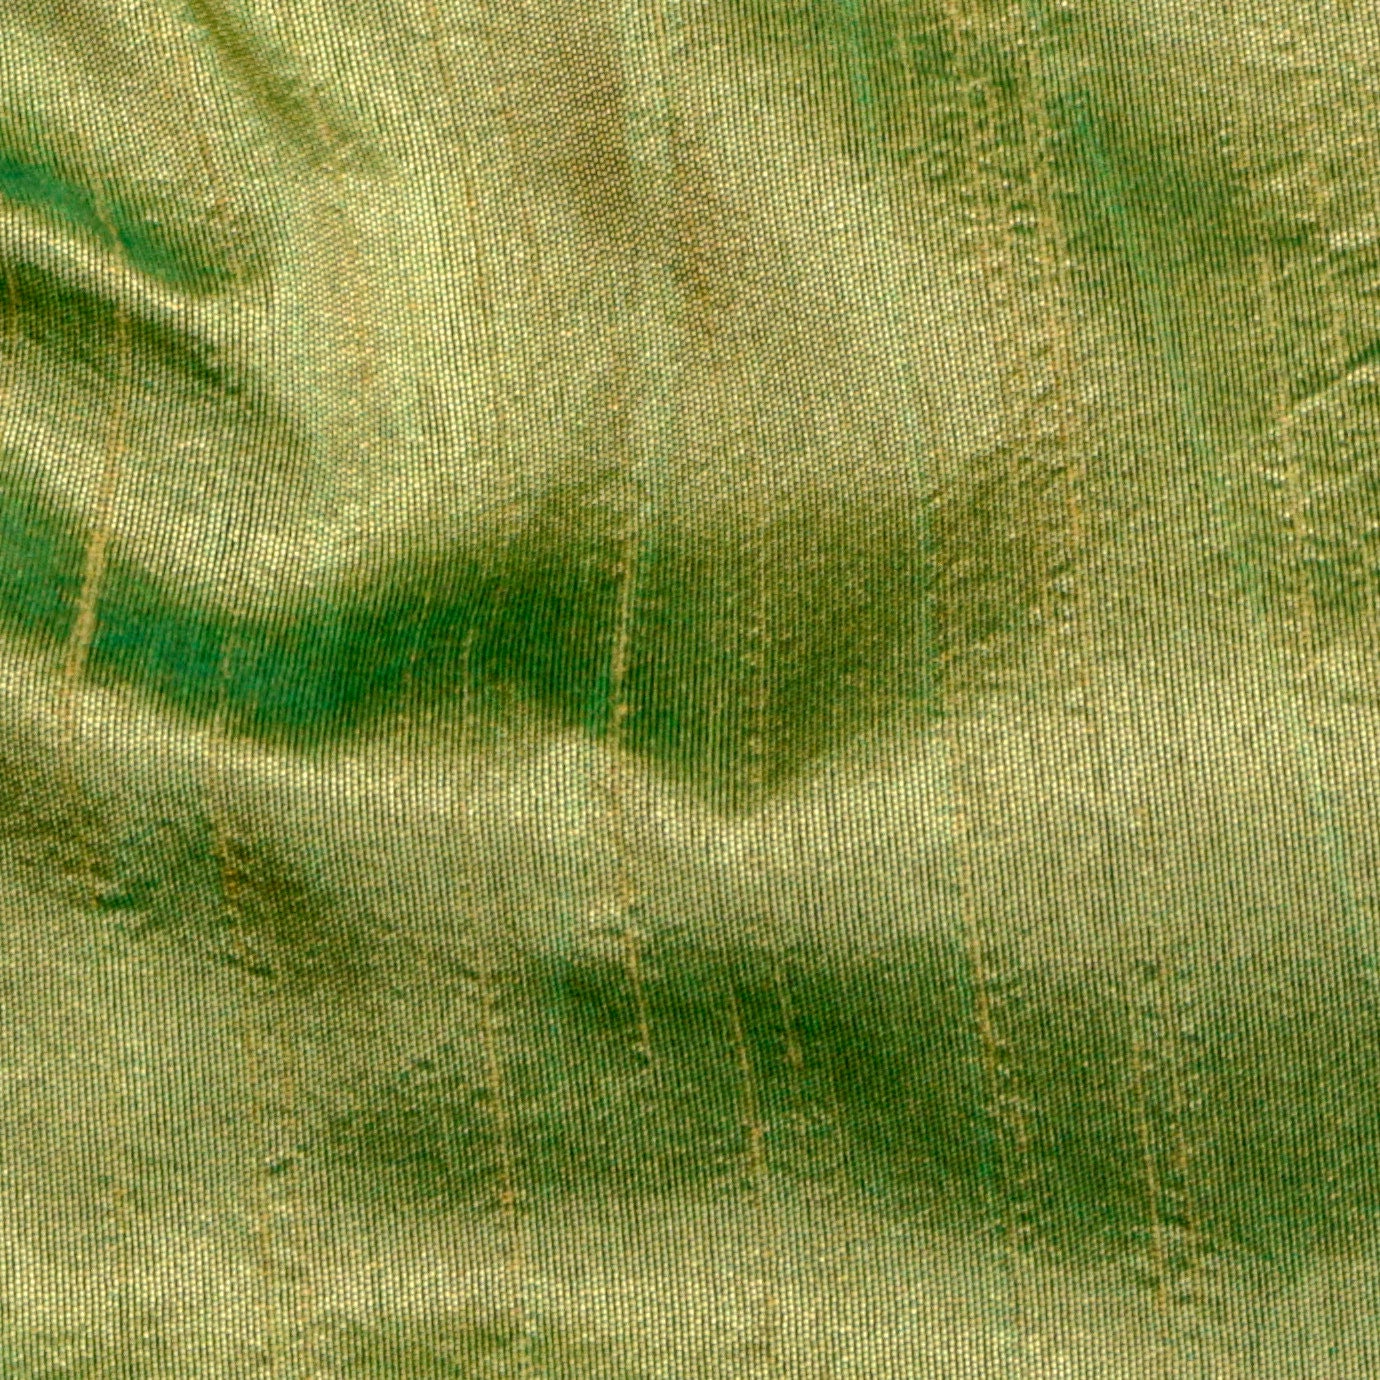 FabricMart Antique Gold Art Silk Fabric By The Yard, Faux Silk Curtain  Fabric, Dress Fabric, Wholesale Art Silk Fabric, Slub Faux Silk Fabric 